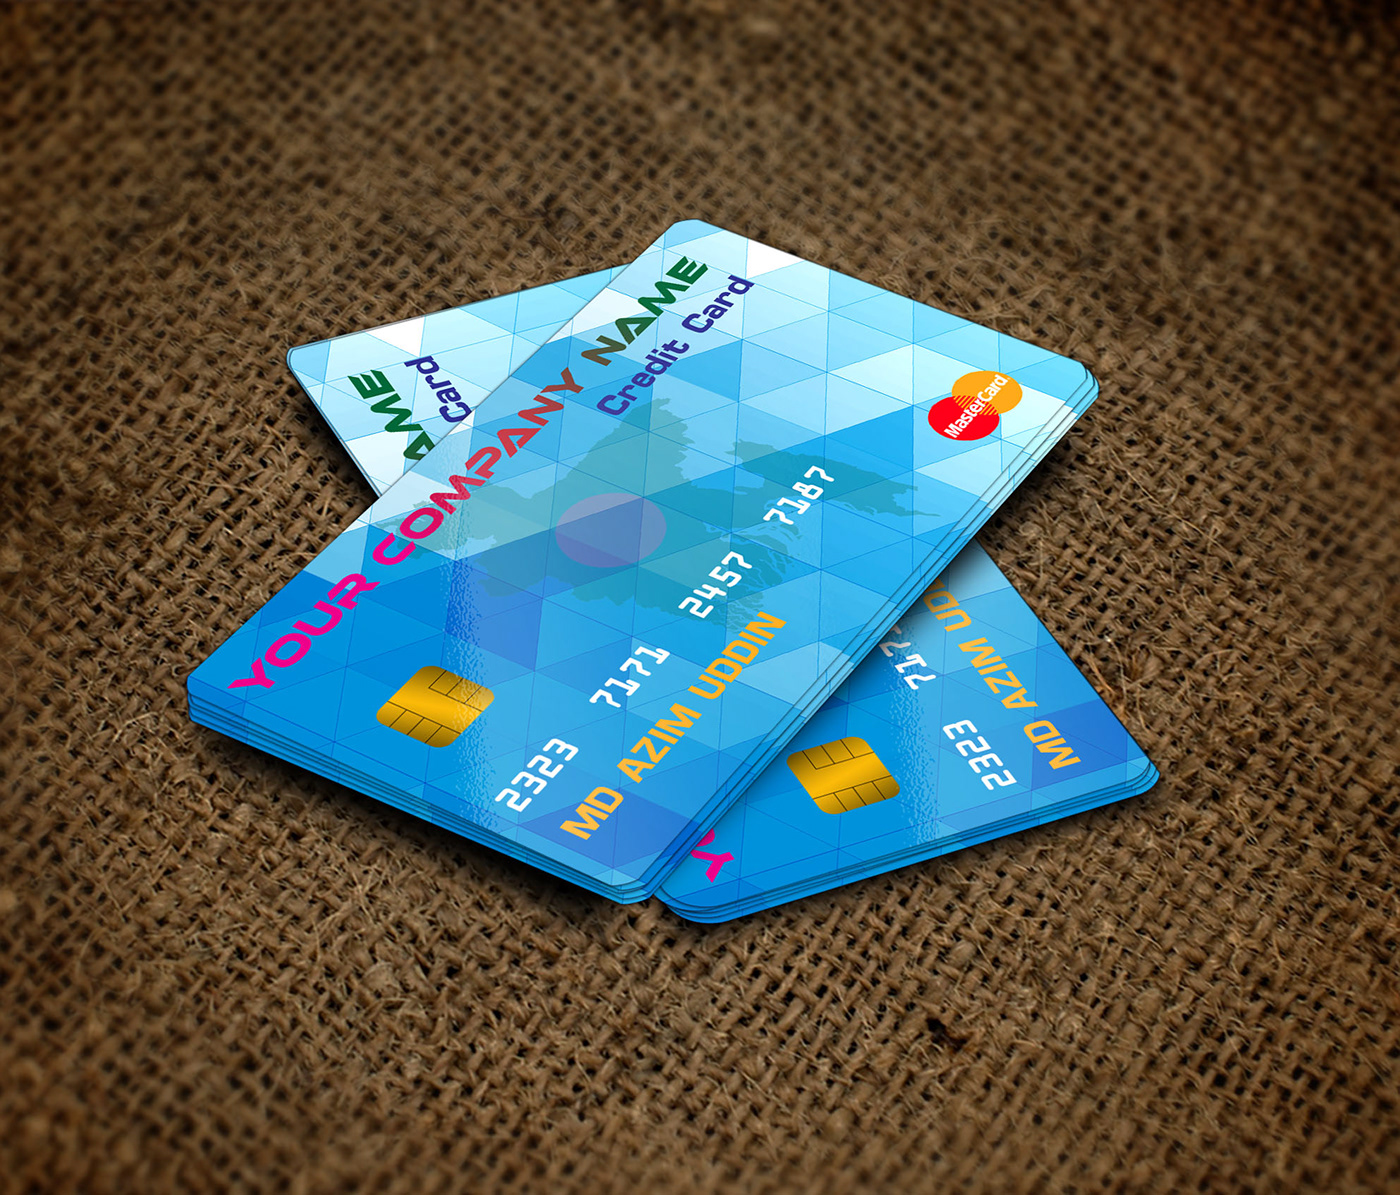 Bank credit card Debit card master mard visa card world master card